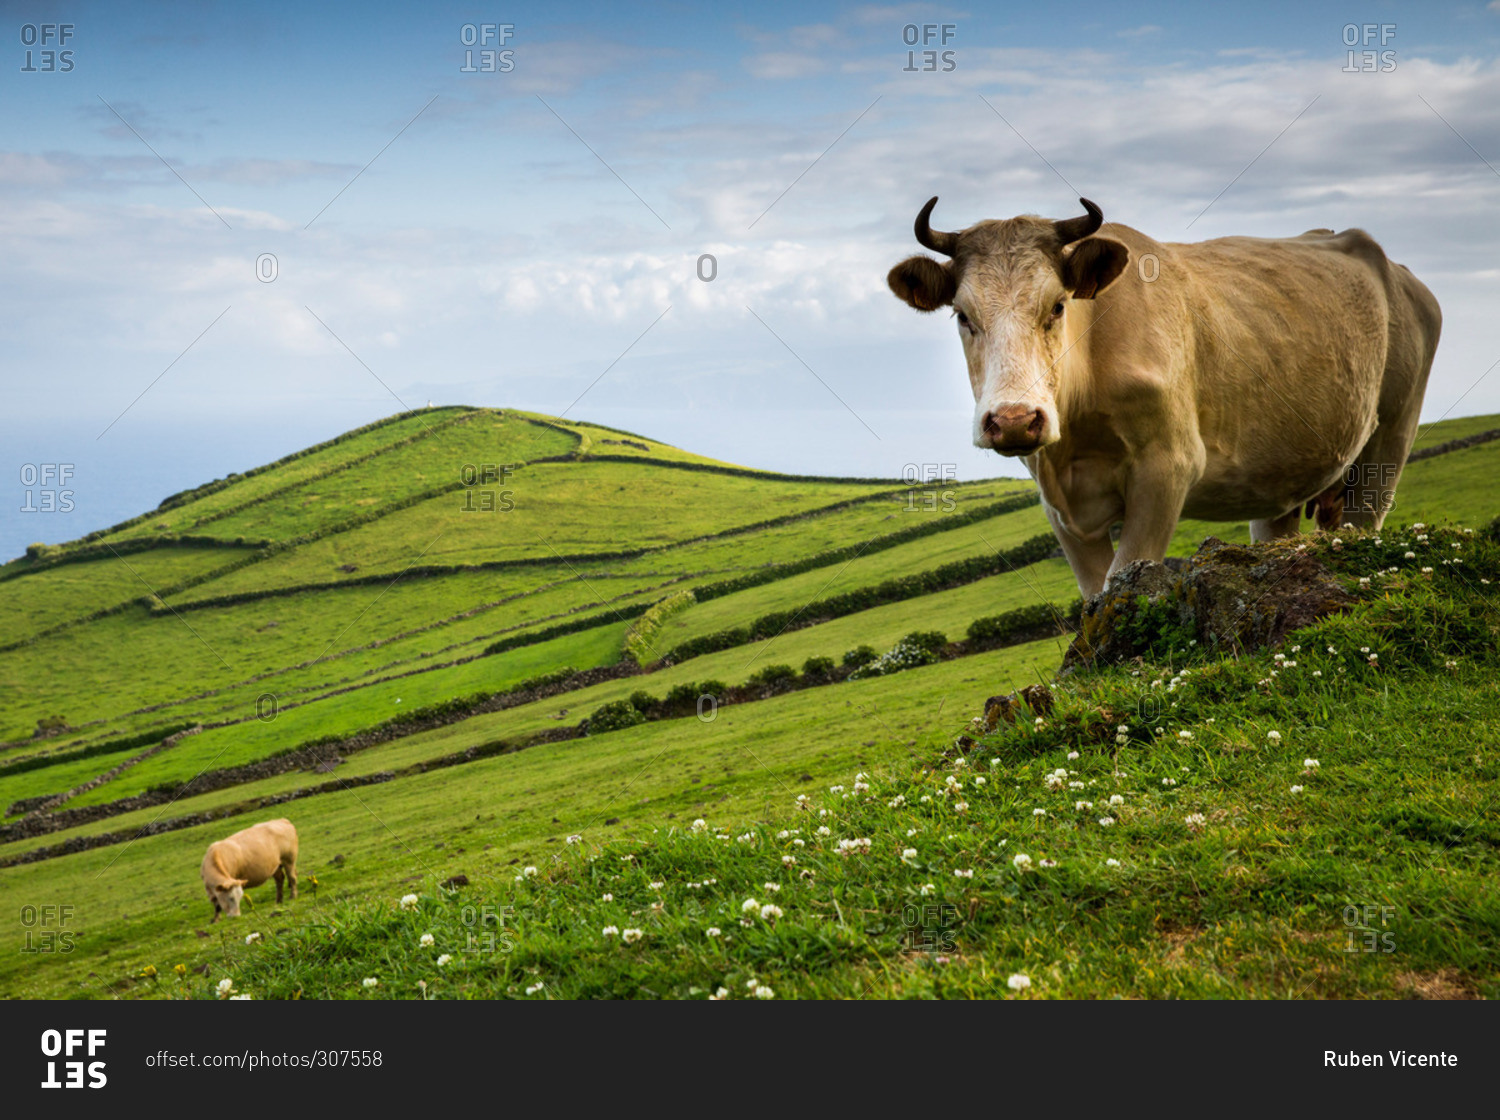 Cow standing on rolling green hills, Corvo Island, Portugal